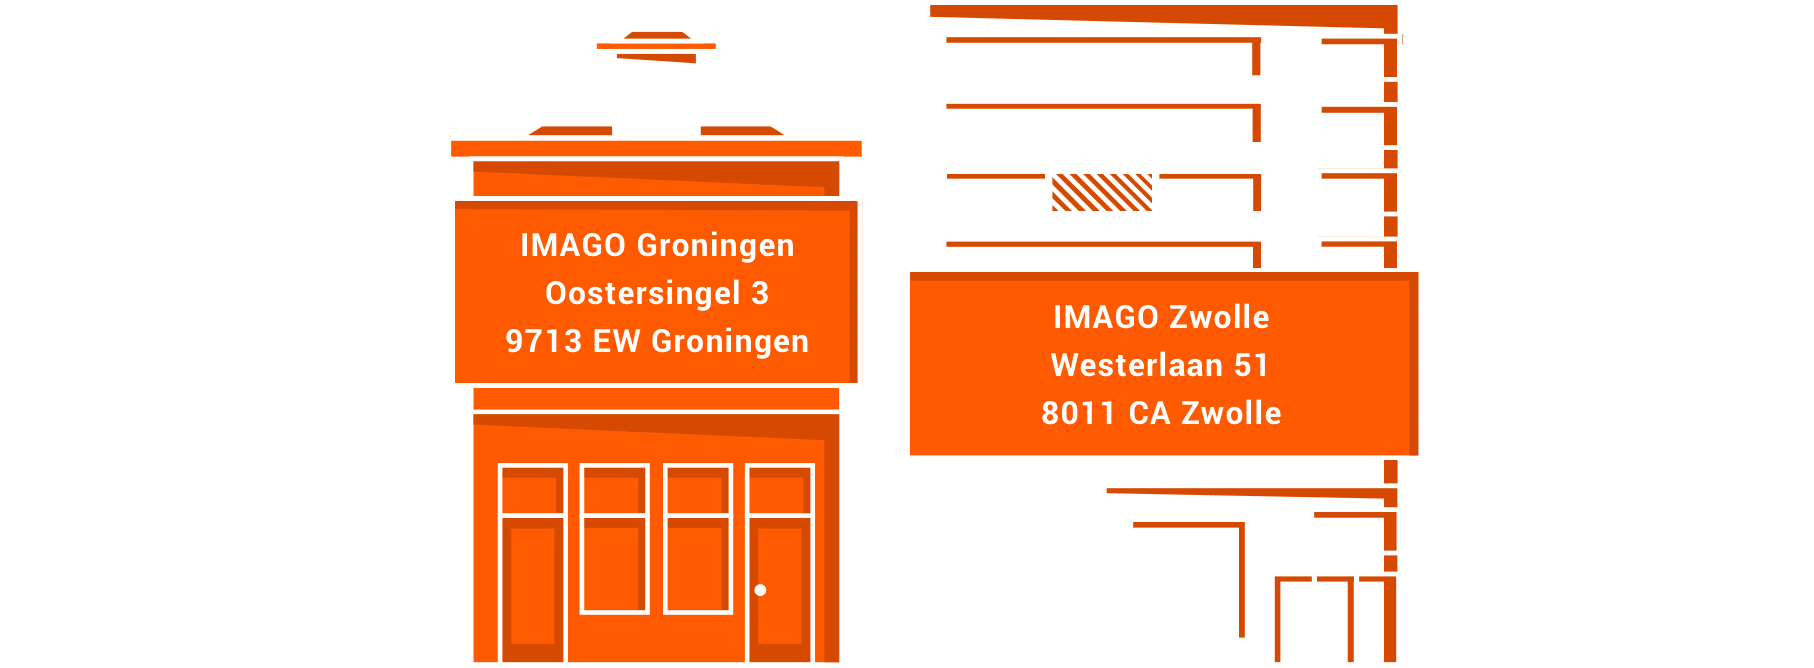 Groningen-Zwolle - Bureau IMAGO